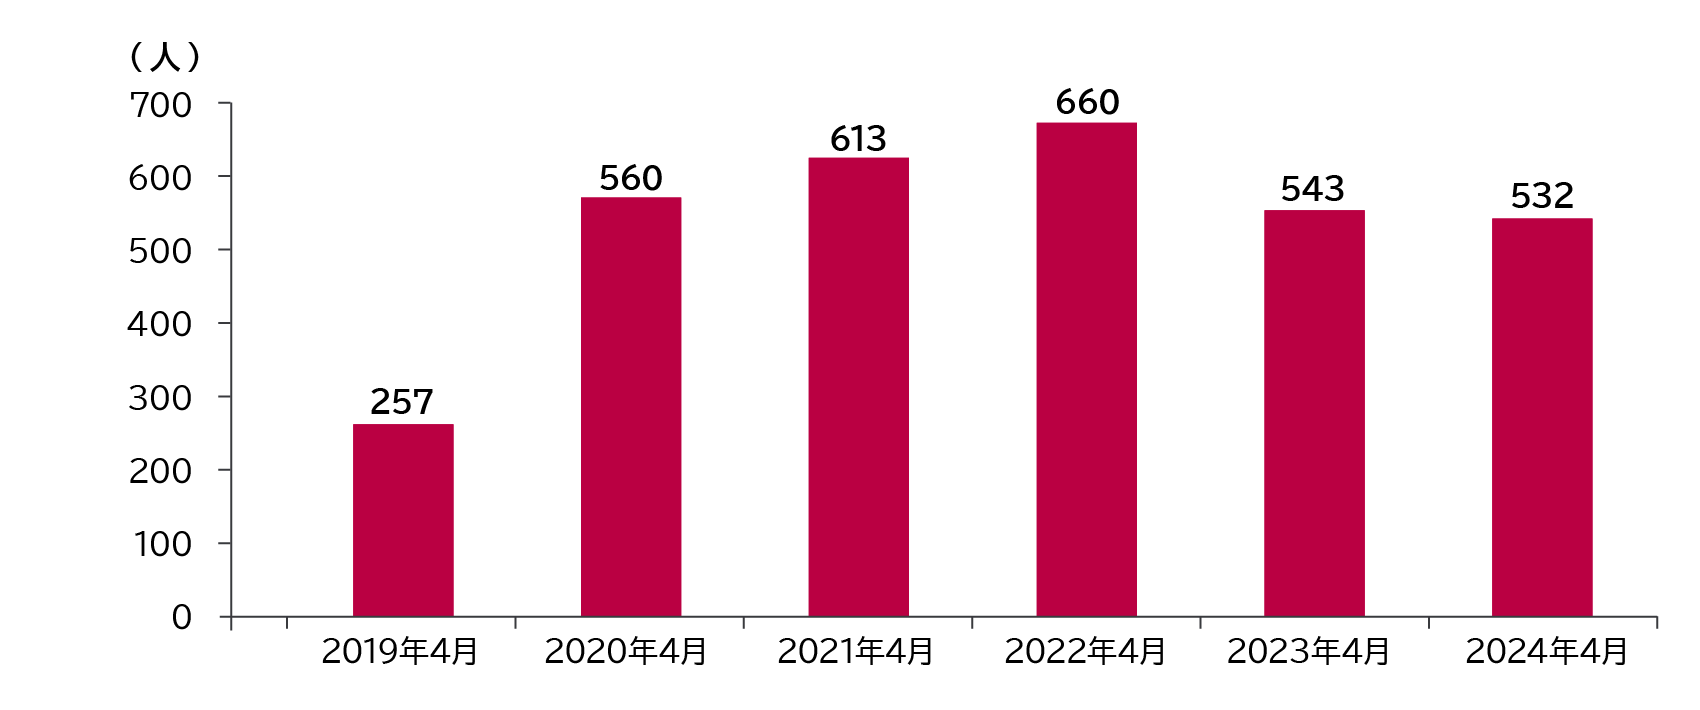 新卒薬剤師 採用人数 棒グラフ：2019年4月 257人、2020年4月 560人、2021年4月 613人、2022年4月 660人、2023年4月 543人、2024年4月 532人